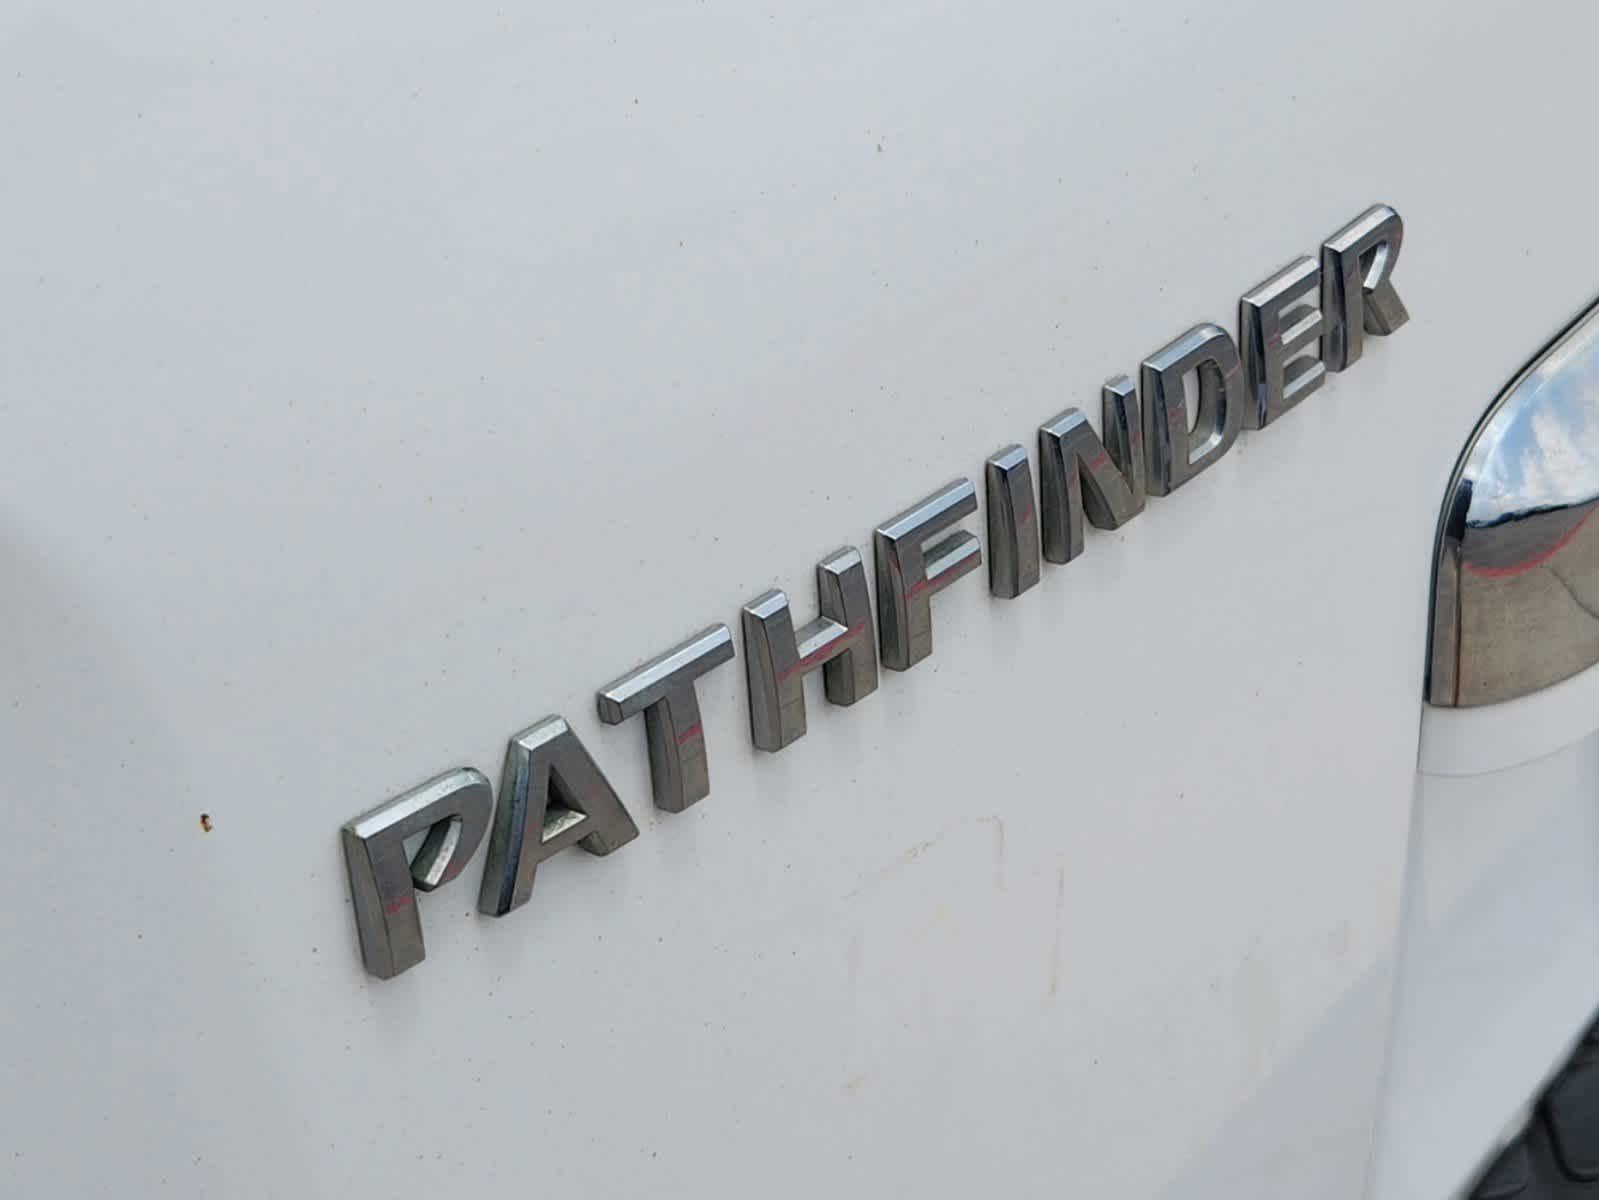 2010 Nissan Pathfinder SE 12